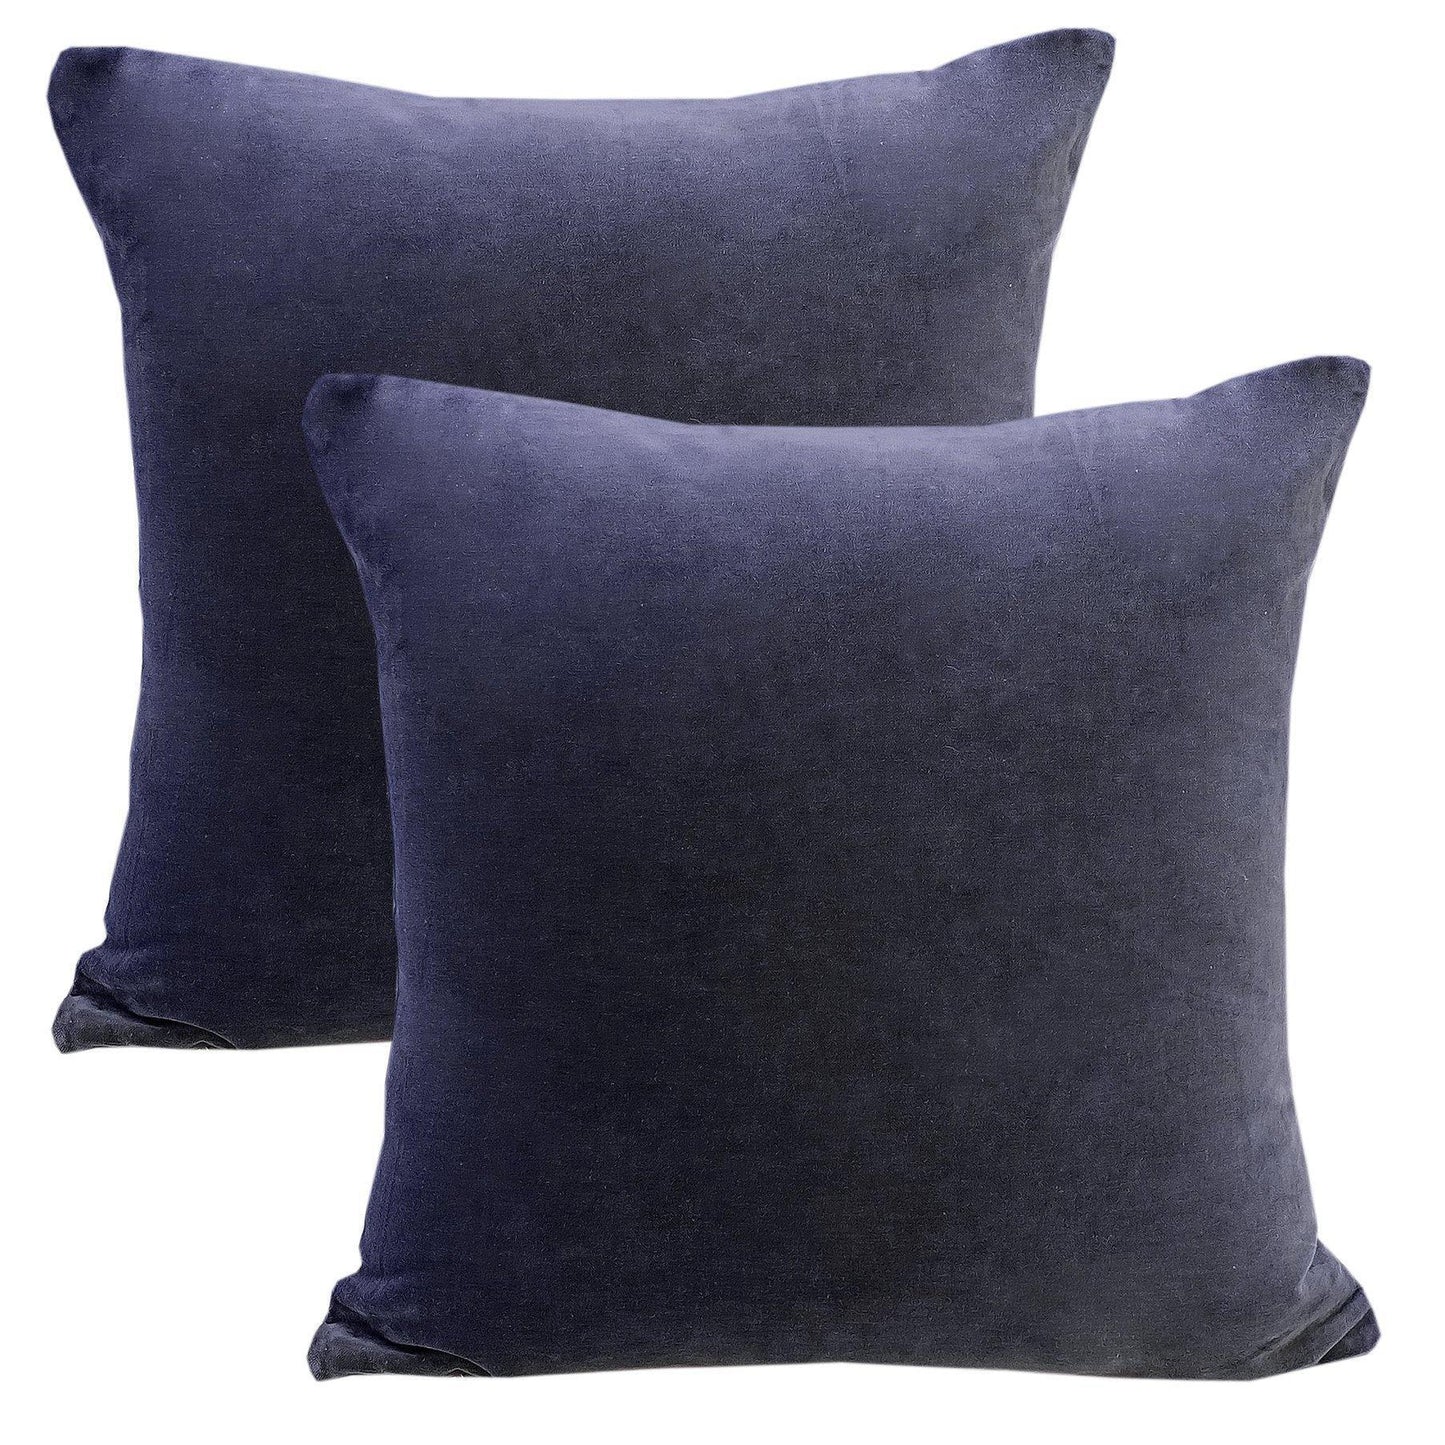 Solid Grey Velvet Cushion Cover - The Teal Thread